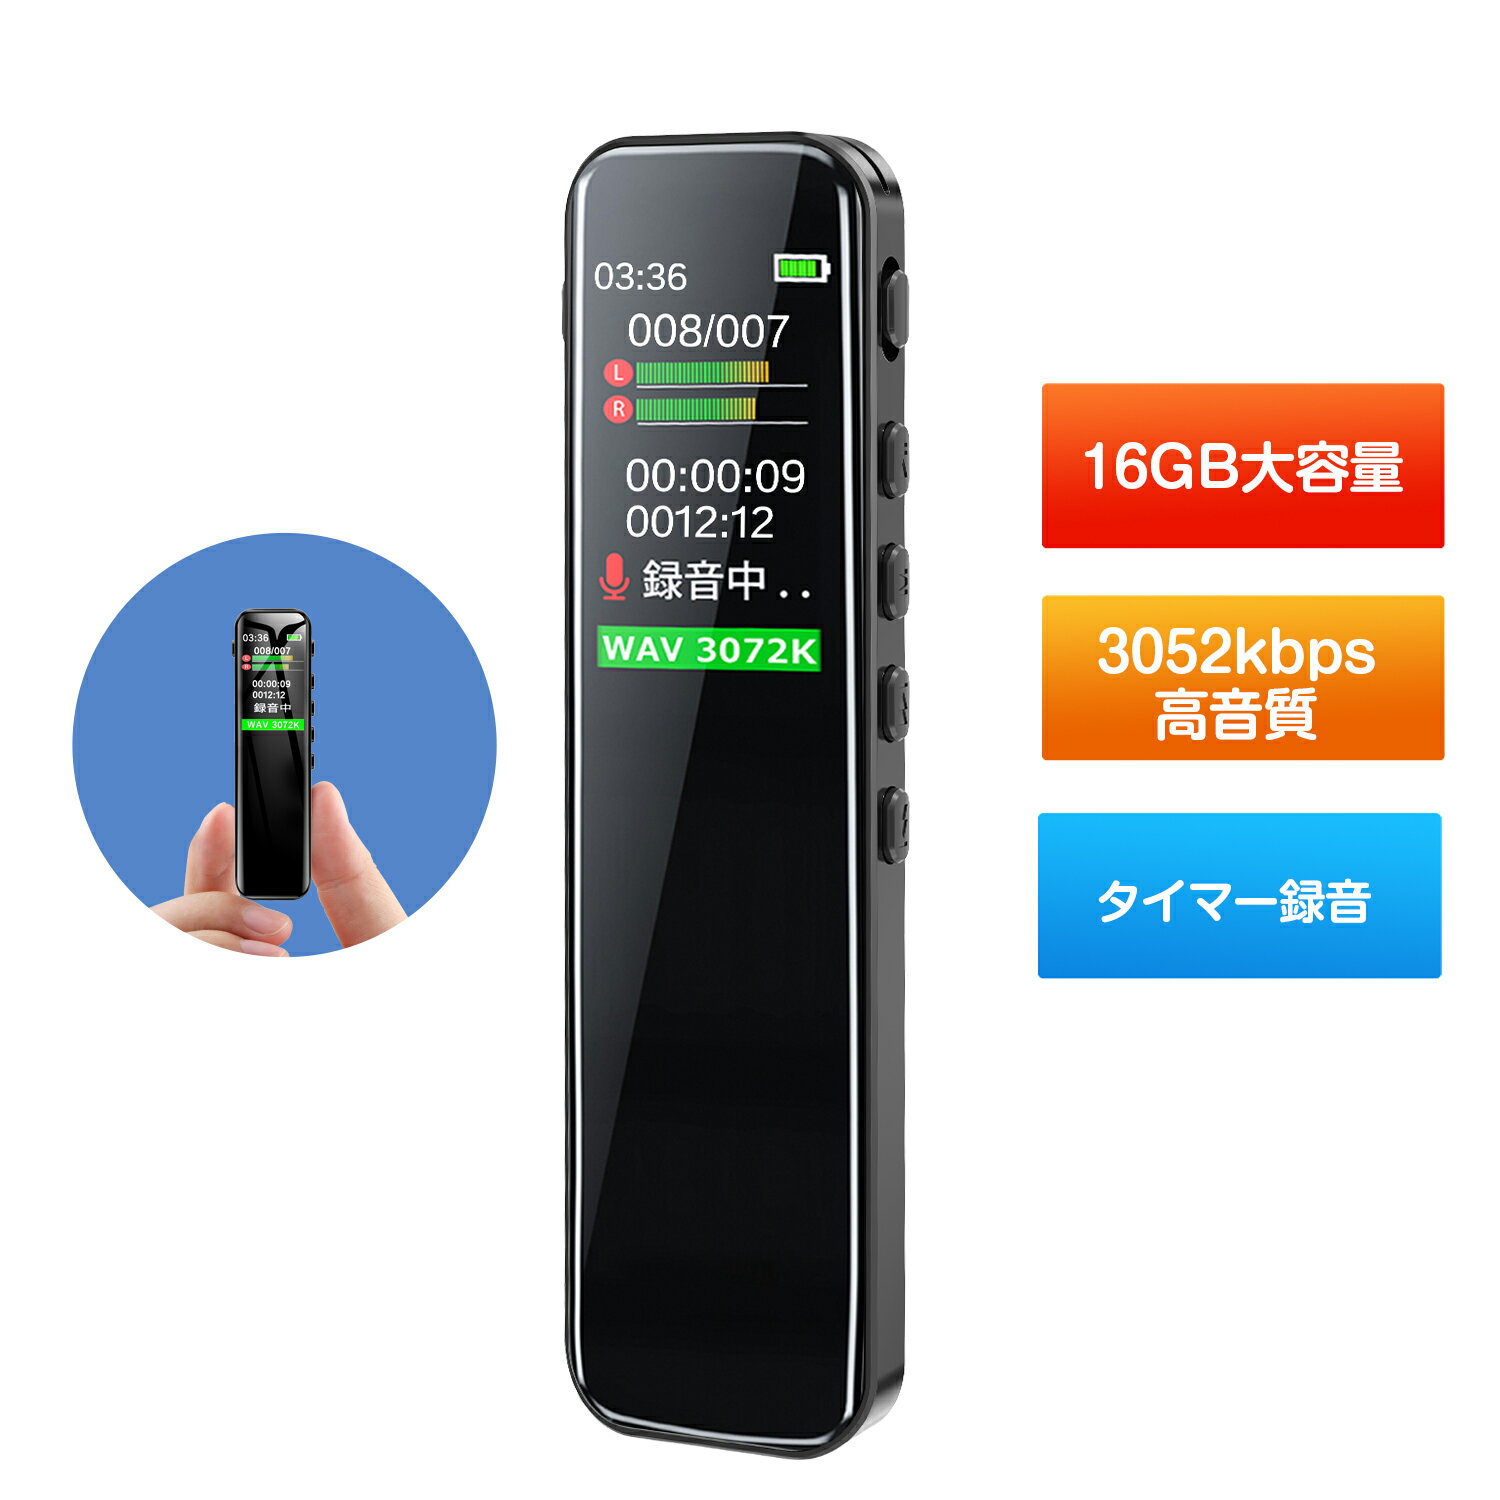 QZT ボイスレコーダー ICレコーダー 録音機 小型 16GB大容量 高音質 長時間録音 小型録音機 小型ボイスレコーダー パスワード保護 モニター付き 音声検知録音 定時録音 変速再生 MP3プレーヤ 簡単操作 高性能 日本語説明書 1年保証